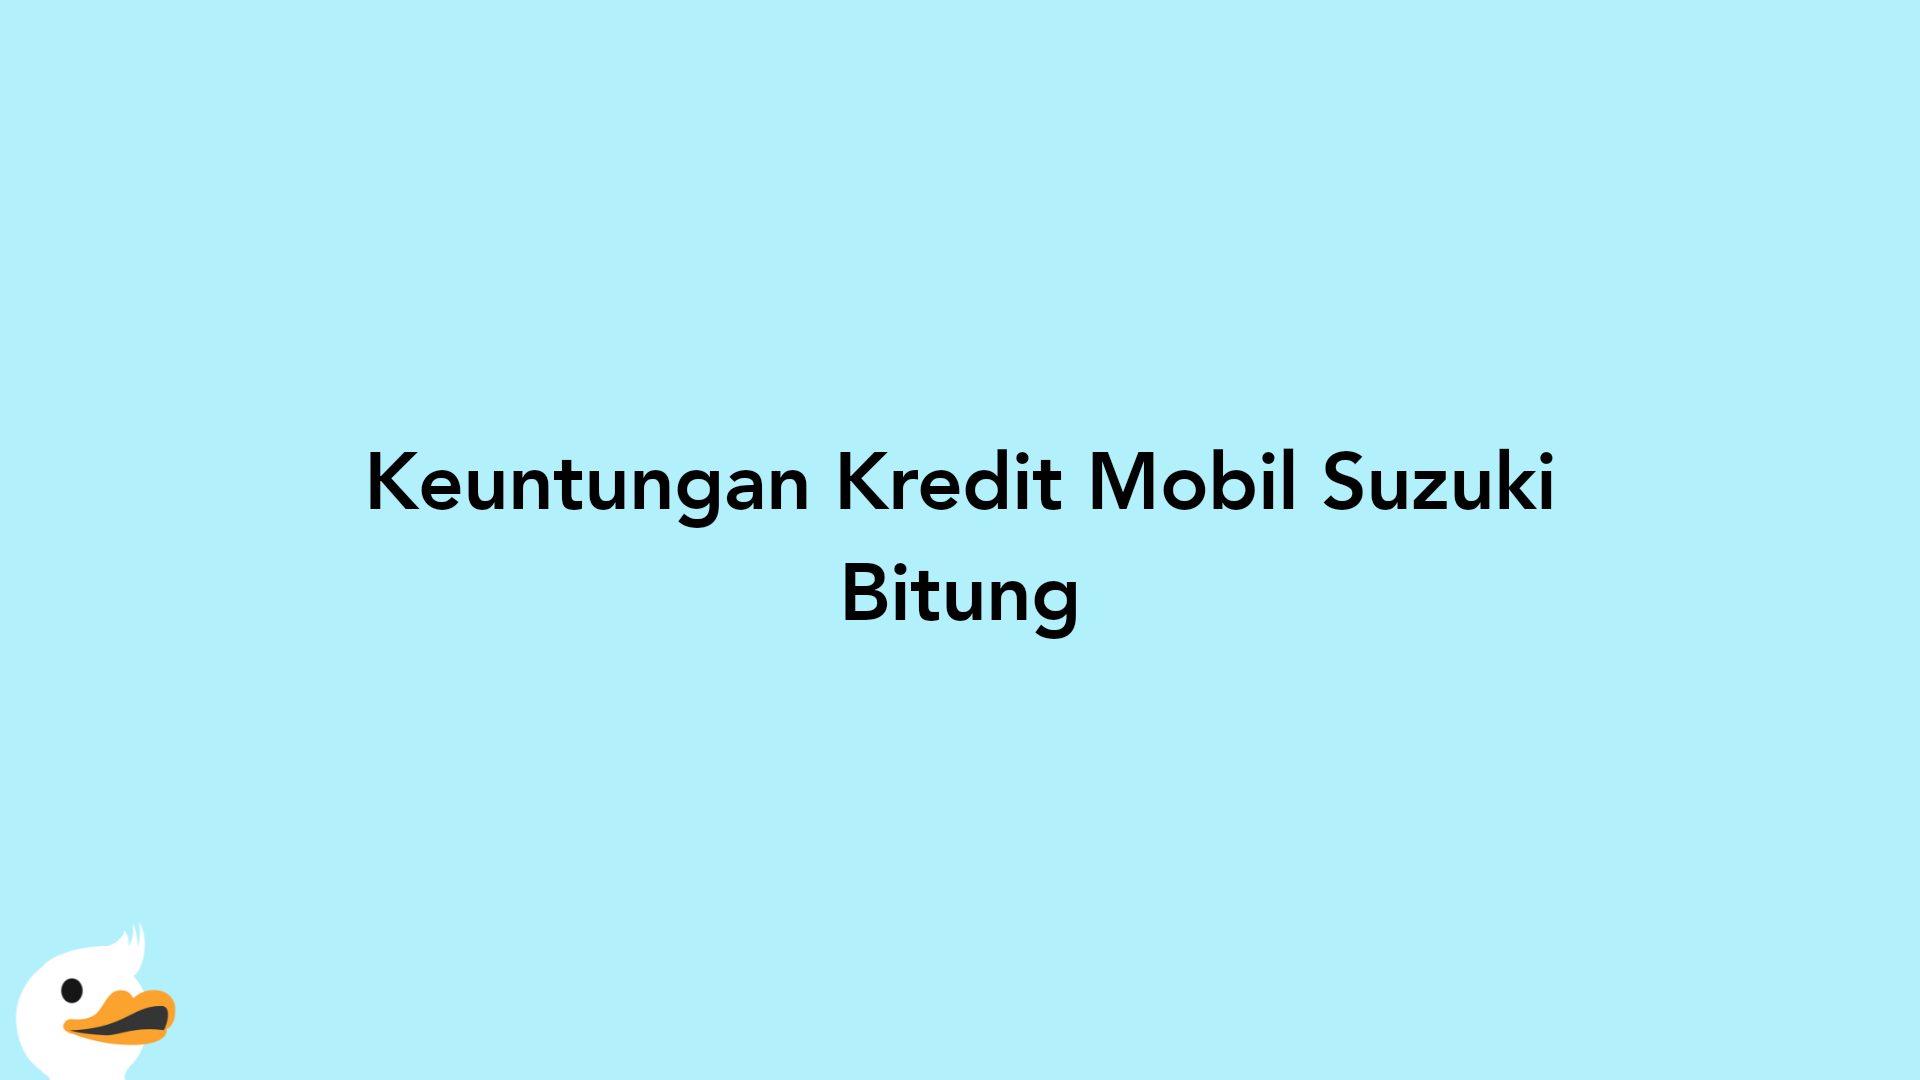 Keuntungan Kredit Mobil Suzuki Bitung